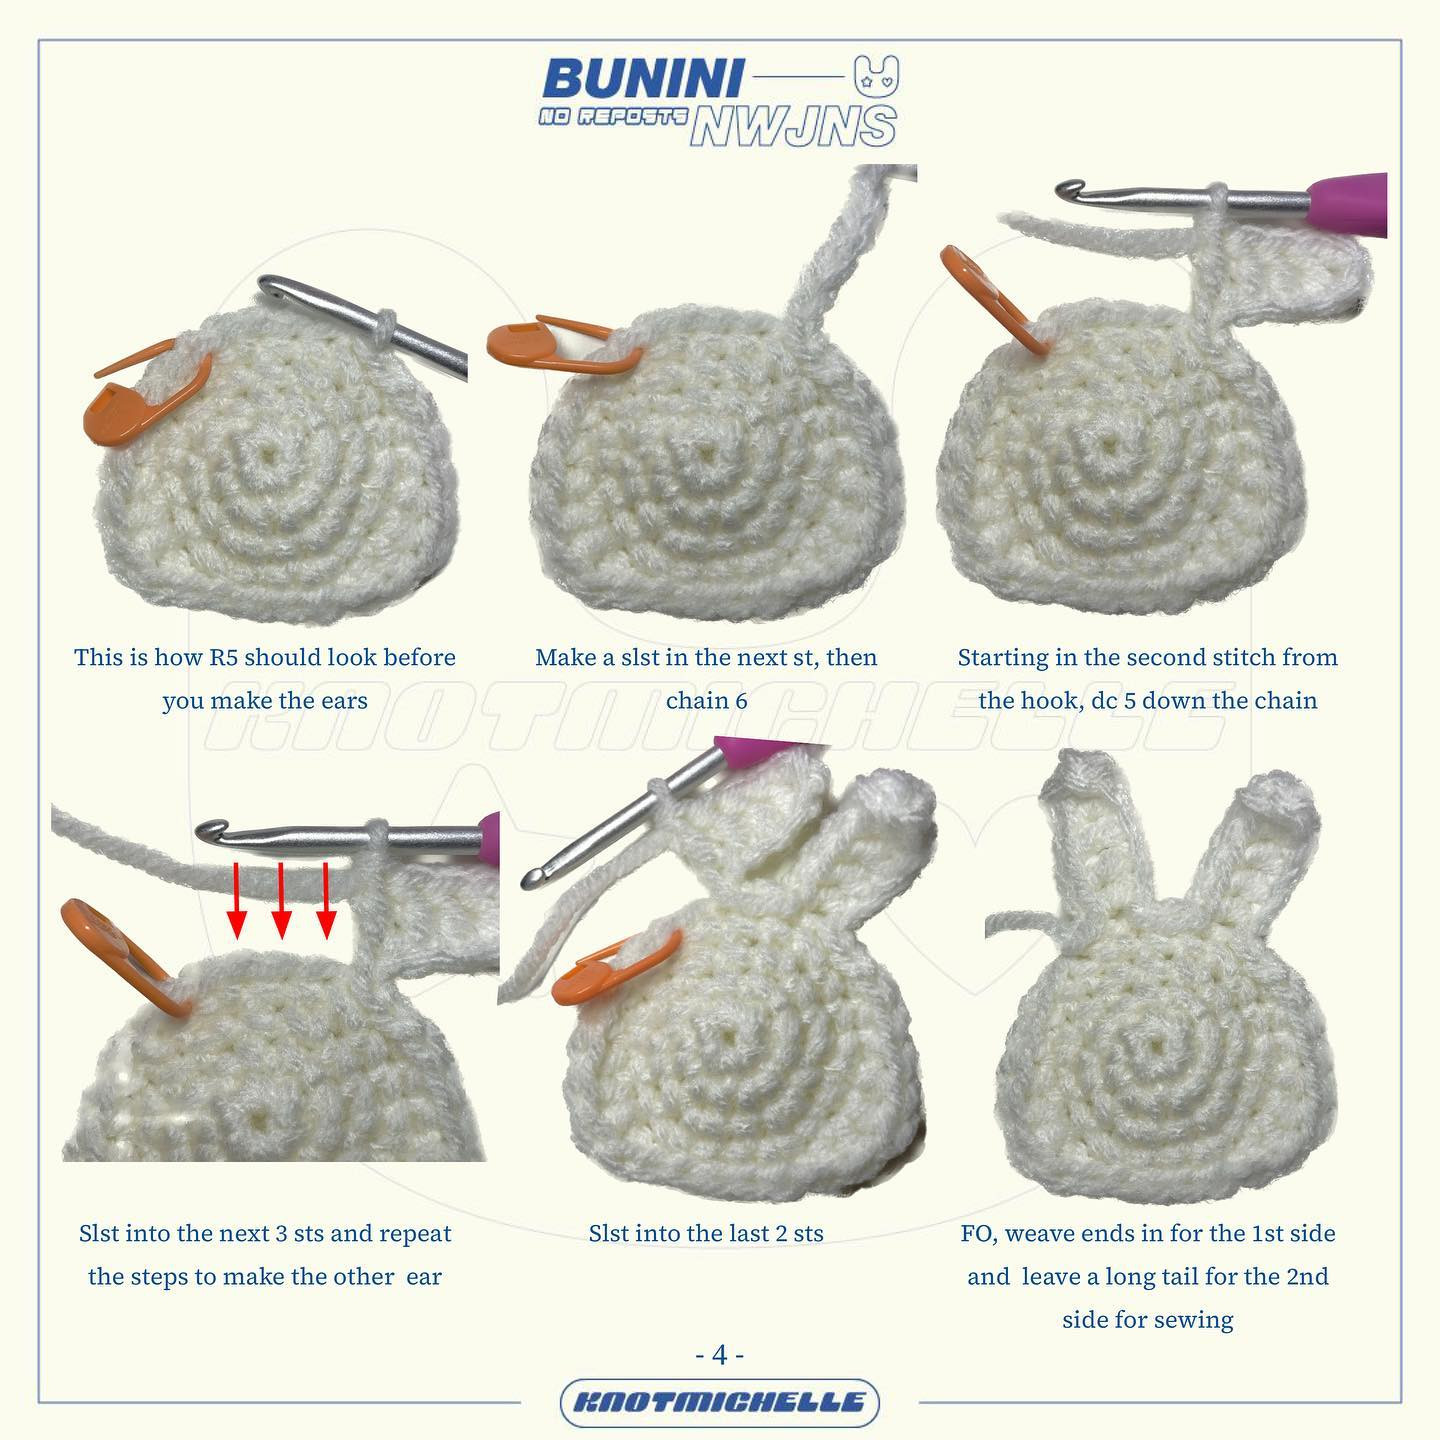 newjeans bunini free pattern